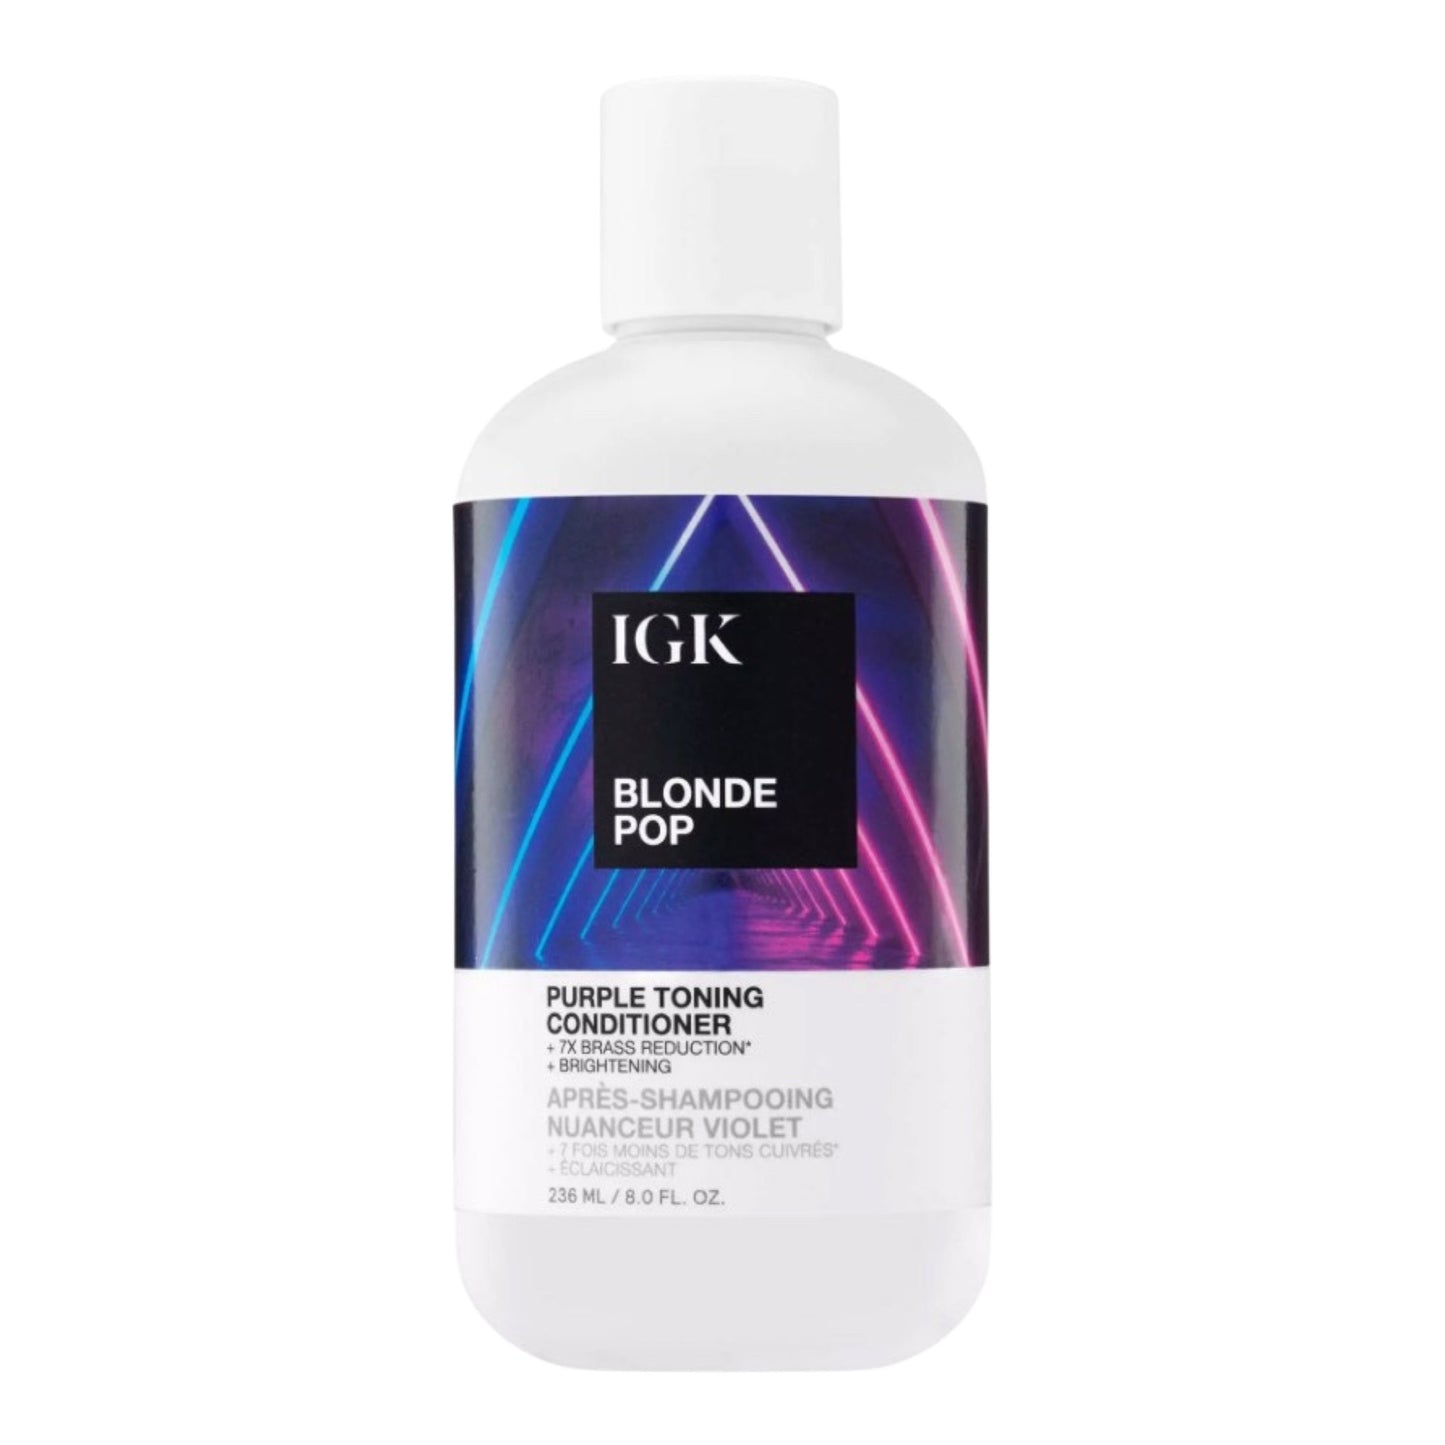 IGK - Blond pop conditoner 236 ml